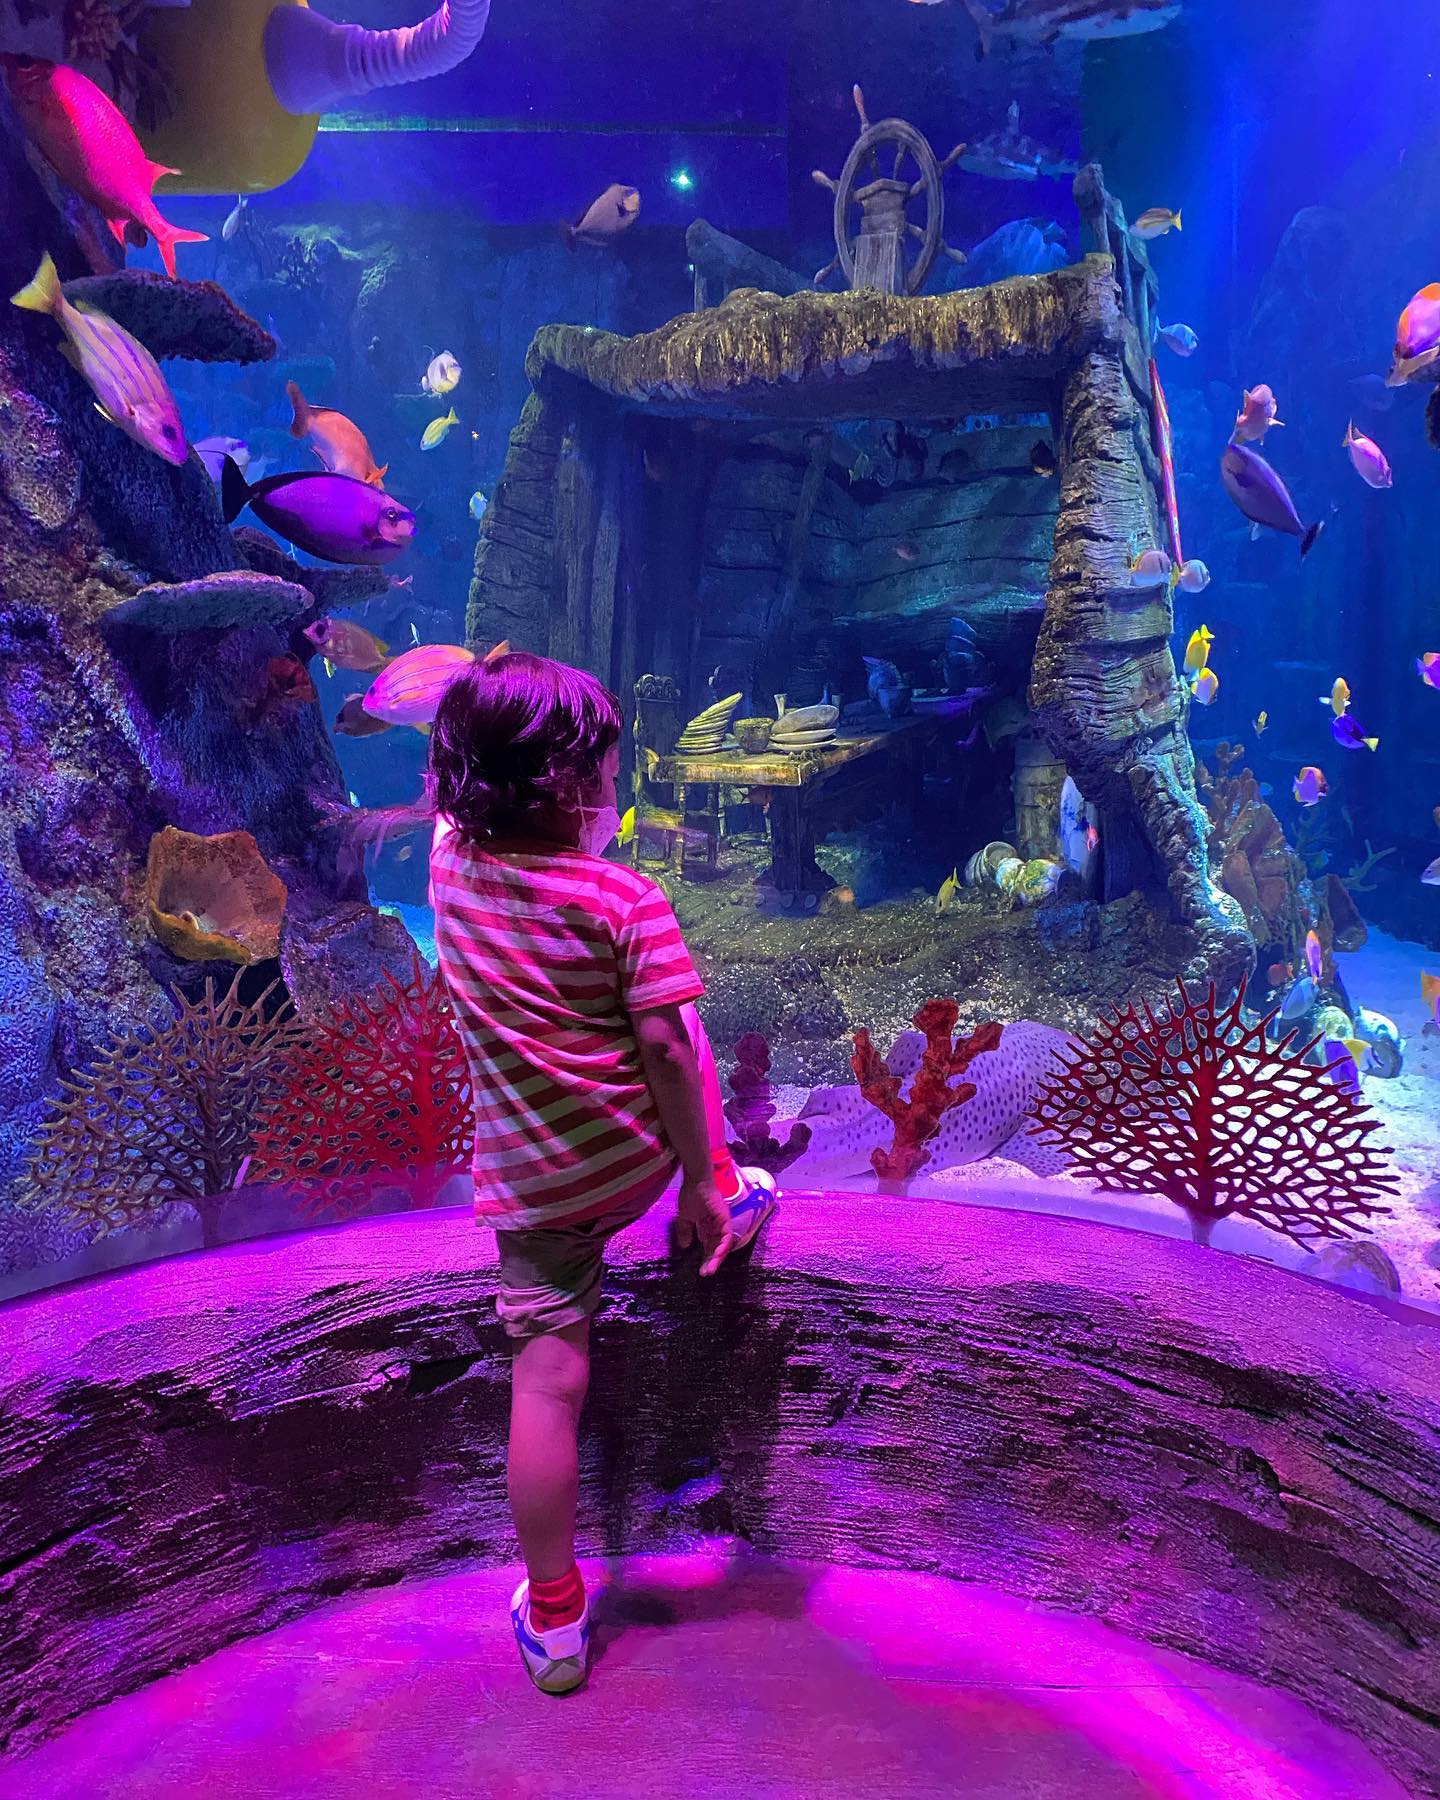 water park with aquarium and kid looking at fish